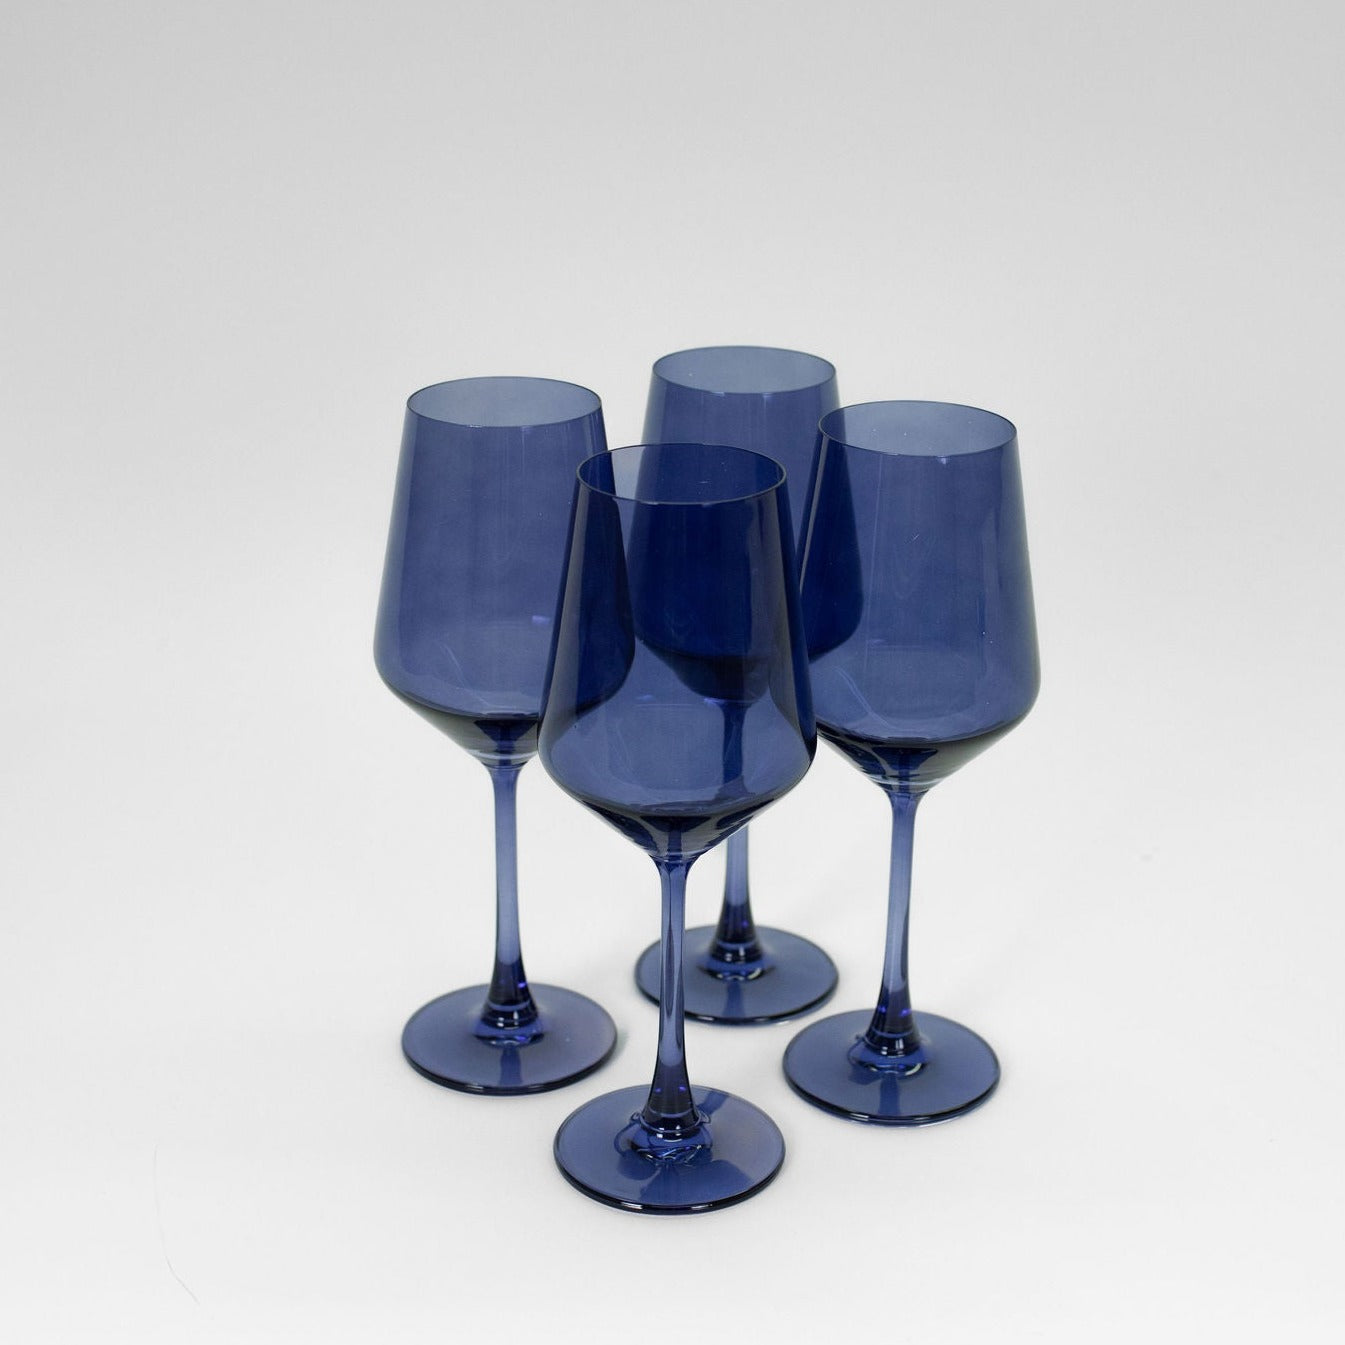 Colored Wine Glasses Indigo-go - Set of 4